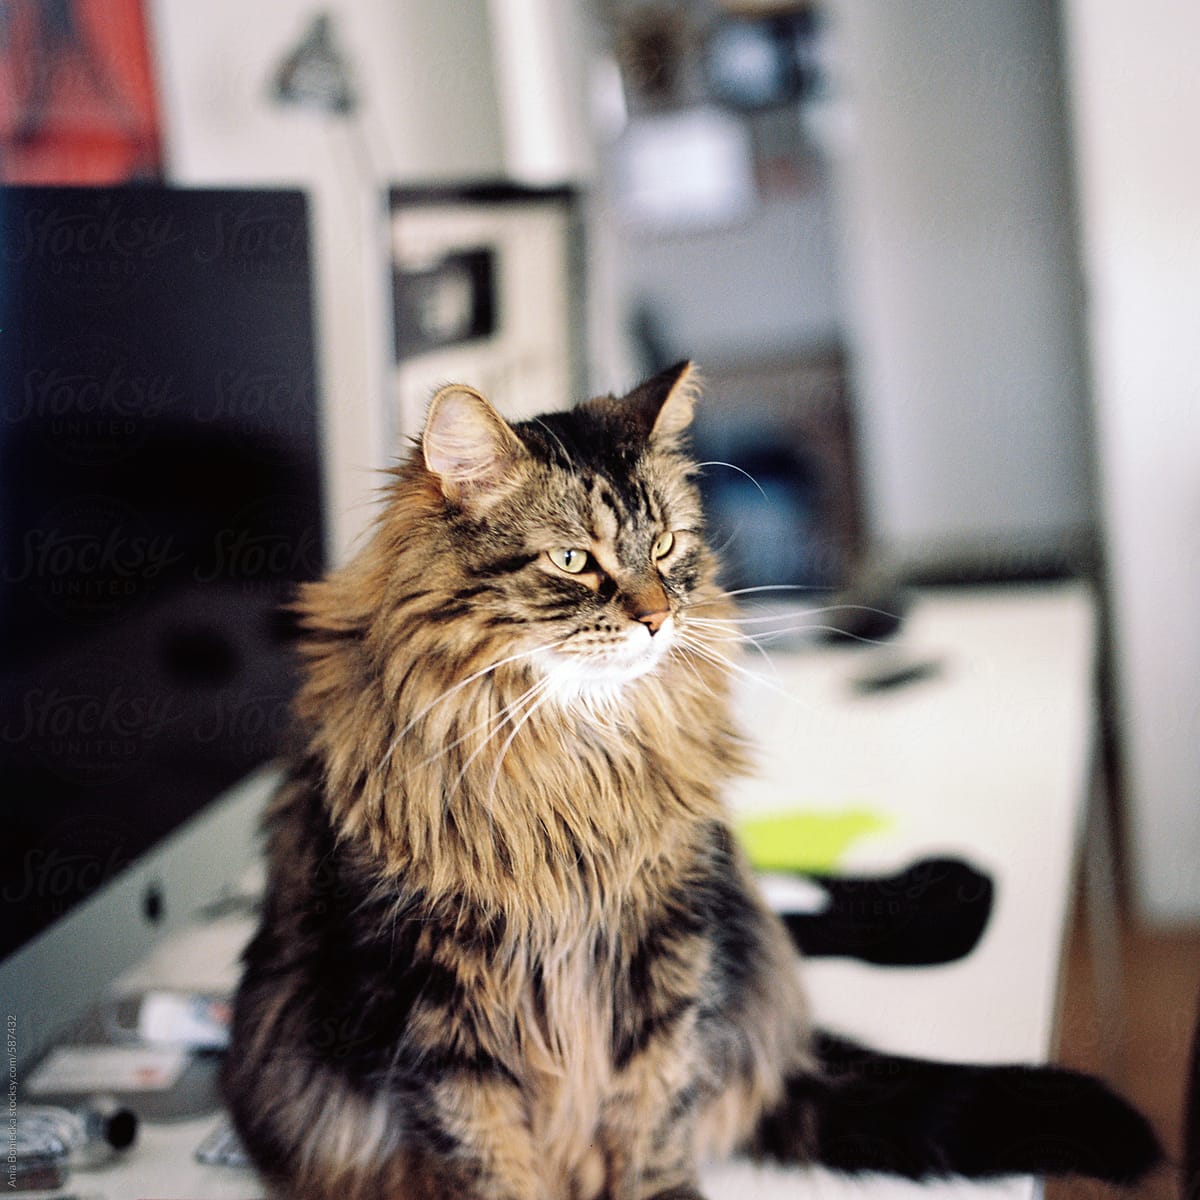 Furry cat sitting on a desk